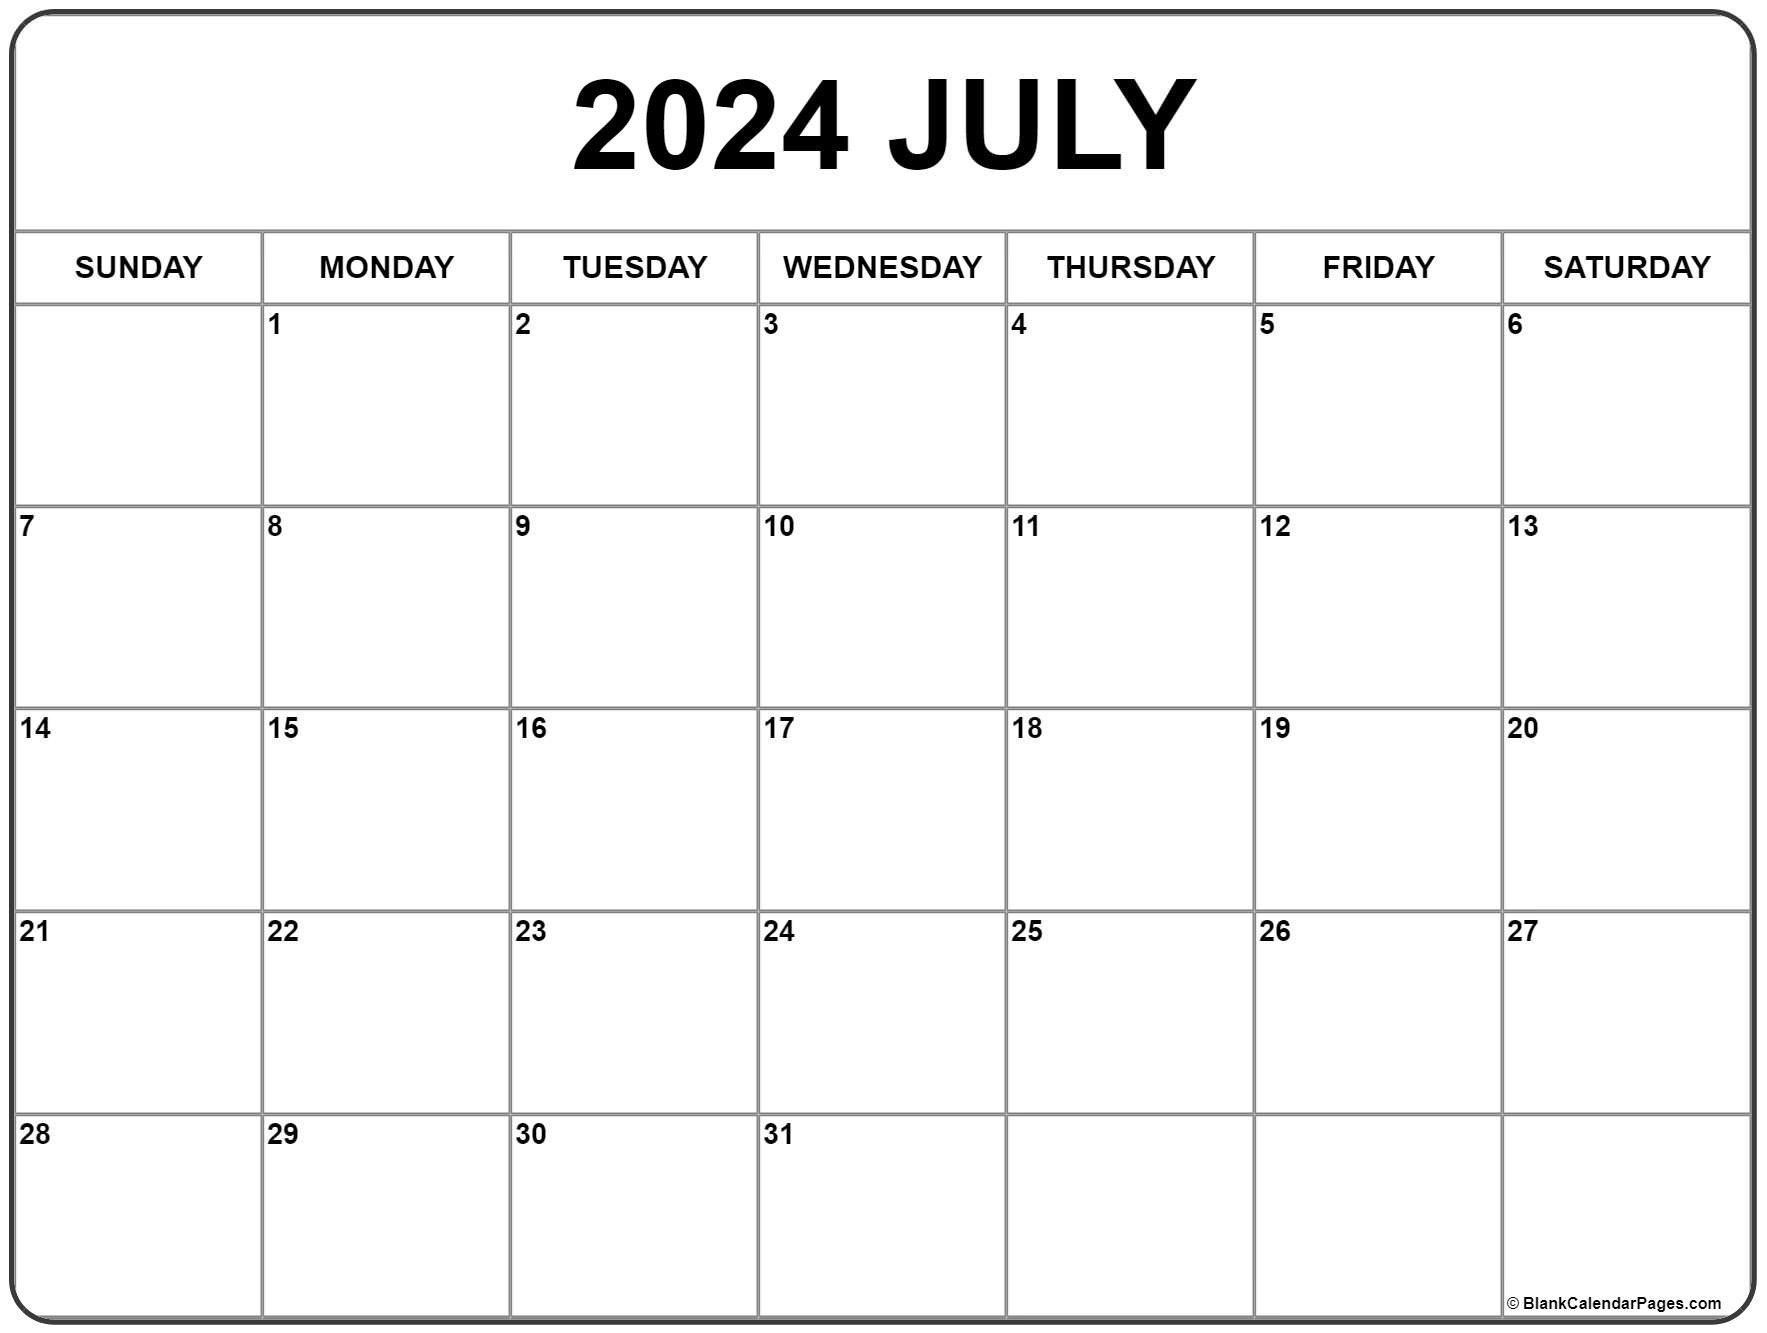 July 2024 Calendar | Free Printable Calendar intended for Calendar 2024 July Month